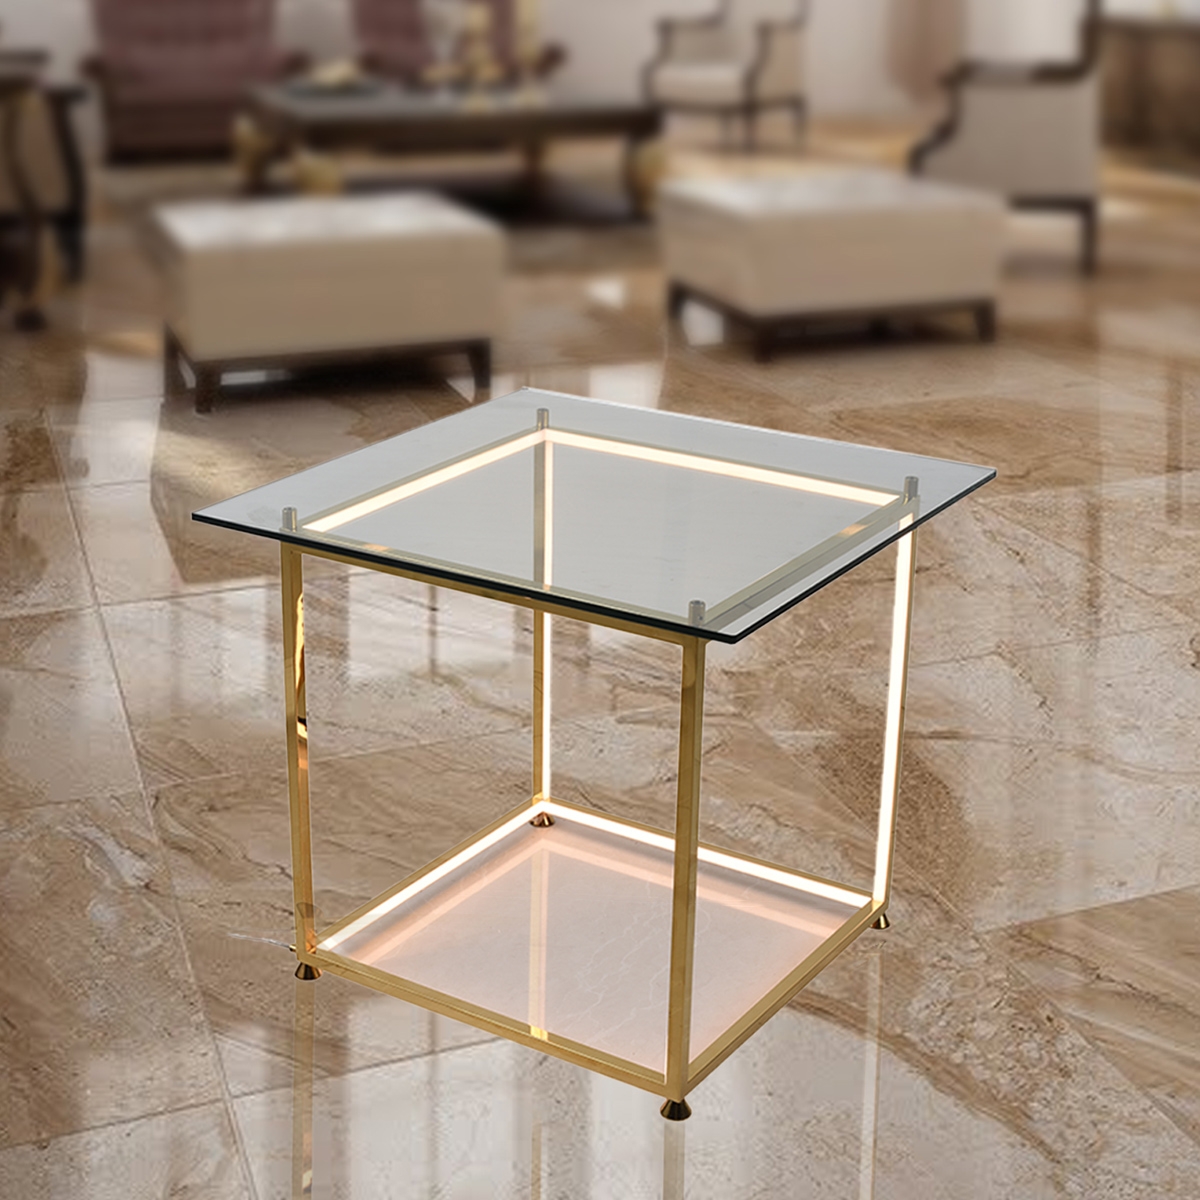 Table Lamp TT20160912-650 Glass-LED 28W Warm White - Gold